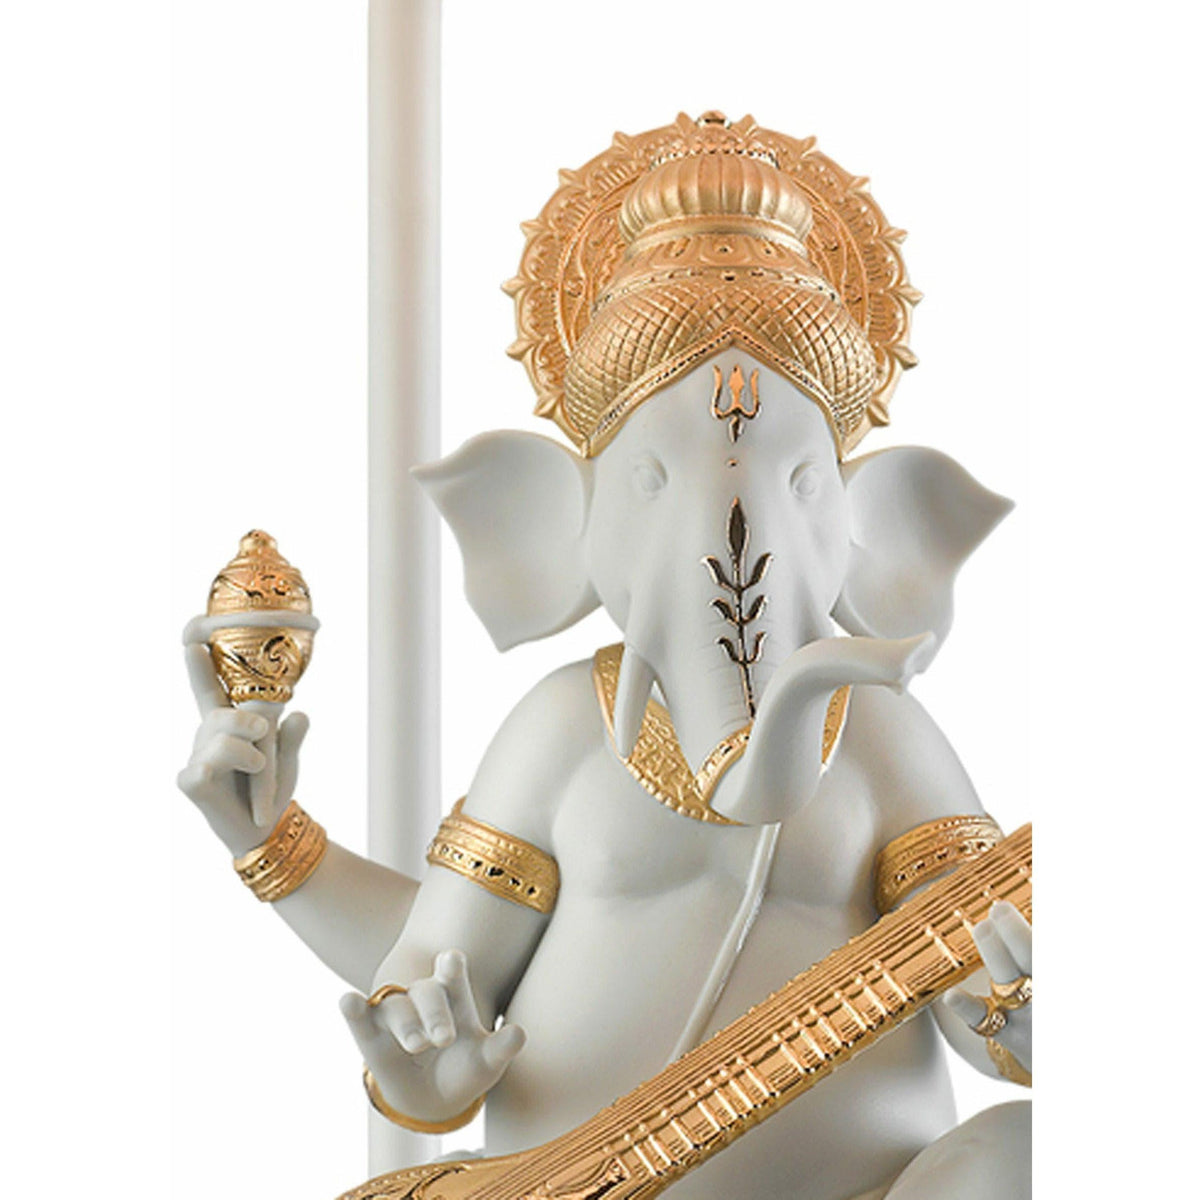 Lladro - Veena Ganesha Table Lamp - 01023168 | Montreal Lighting & Hardware